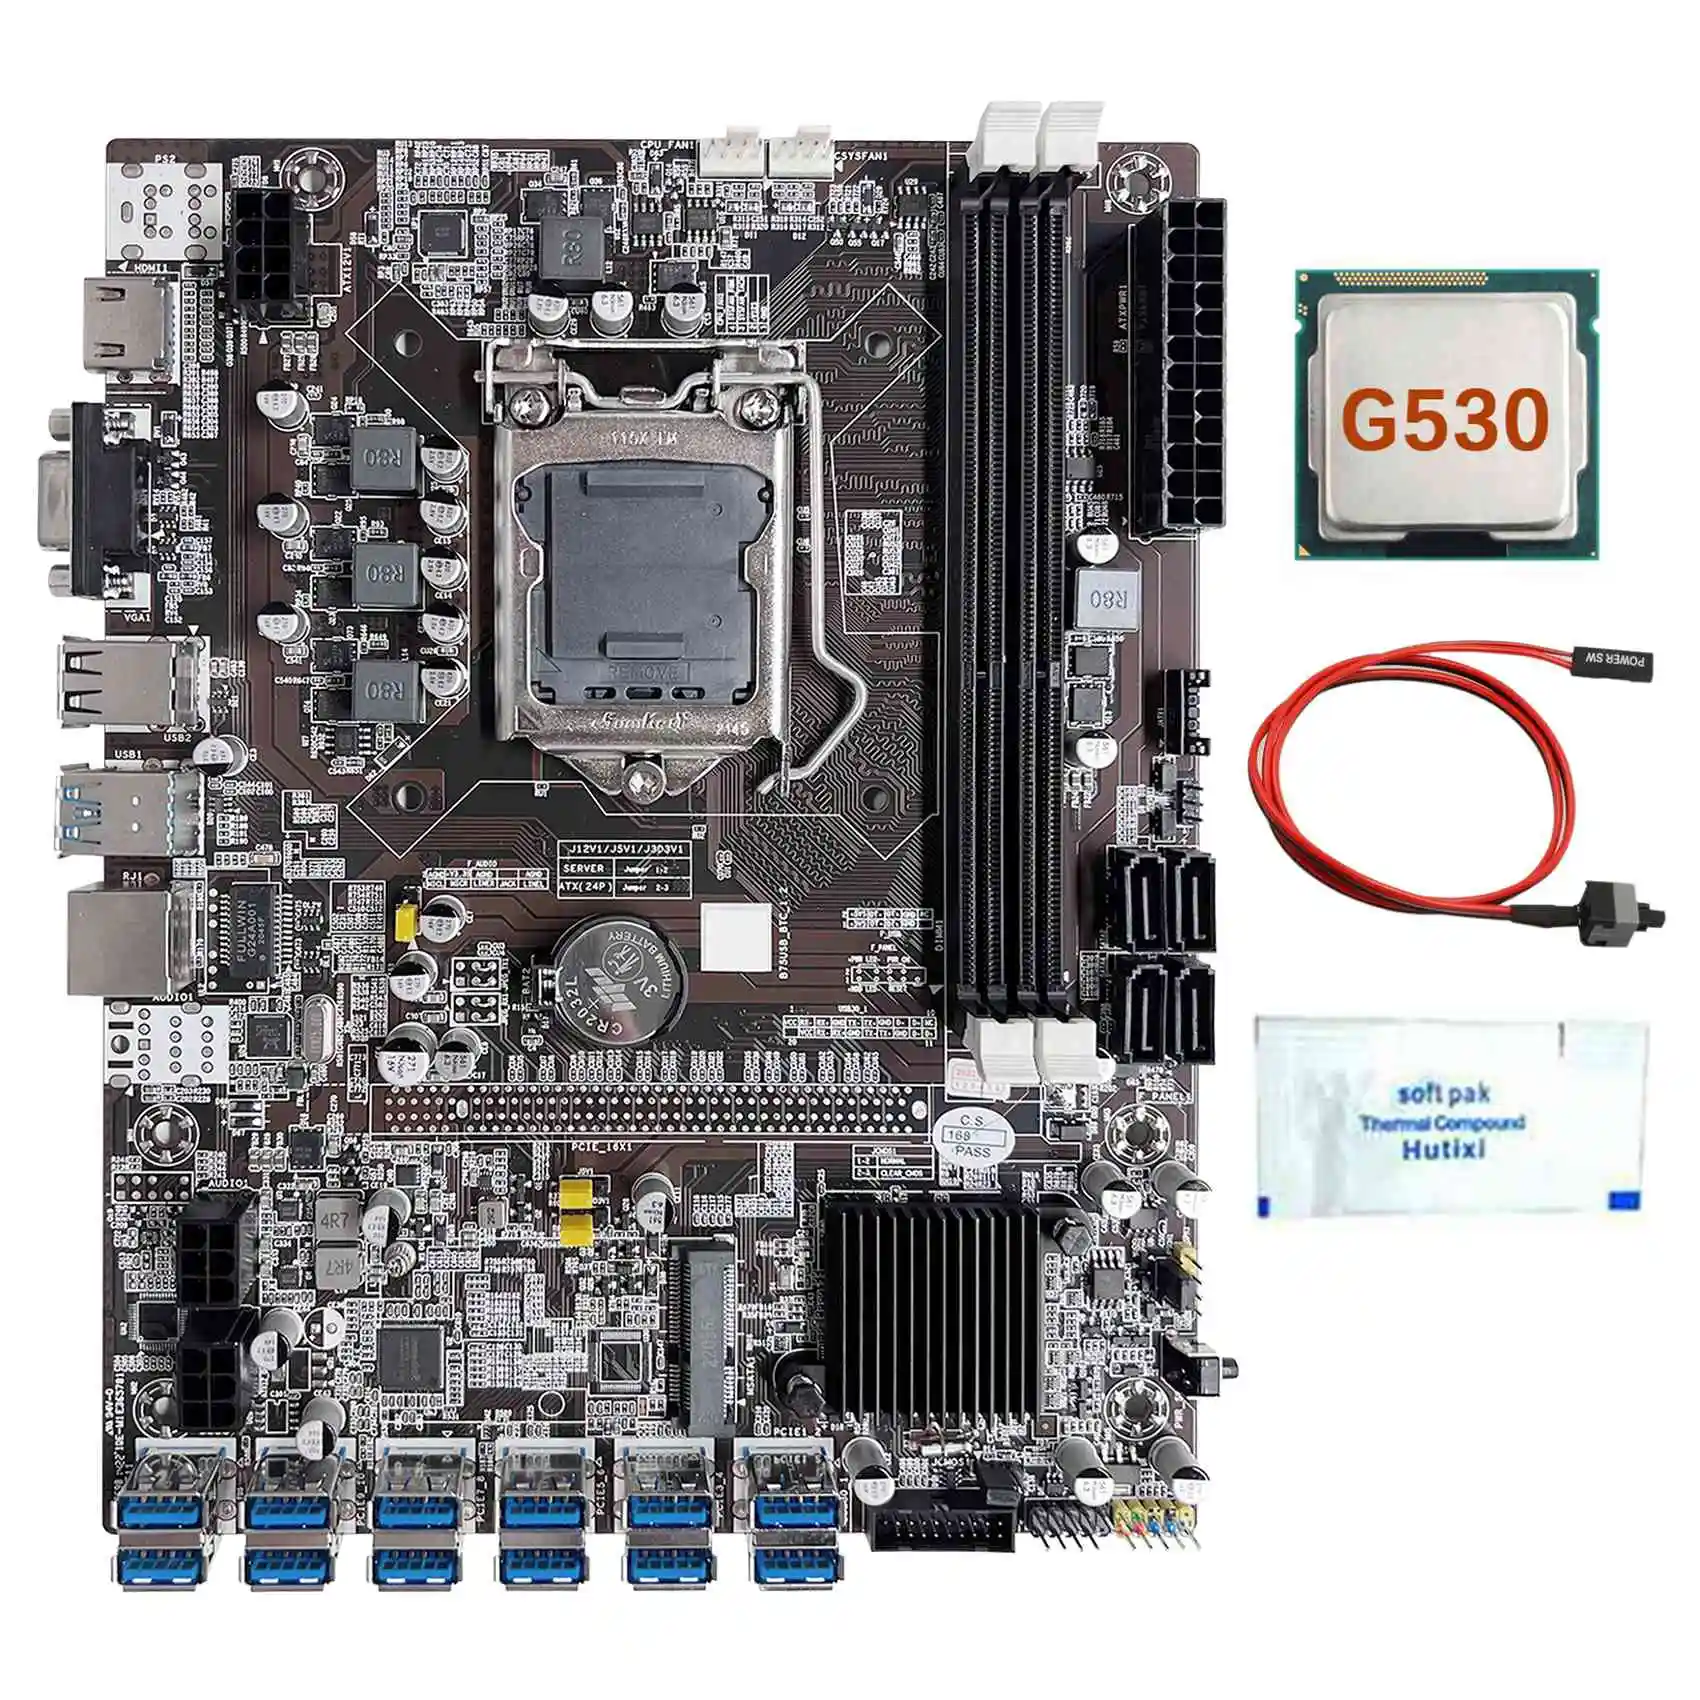 B75 12 Card GPU BTC Mining Motherboard+G530 CPU+Thermal Grease+Switch Cable 12XUSB3.0(PCIE) Slot LGA1155 DDR3 RAM MSATA